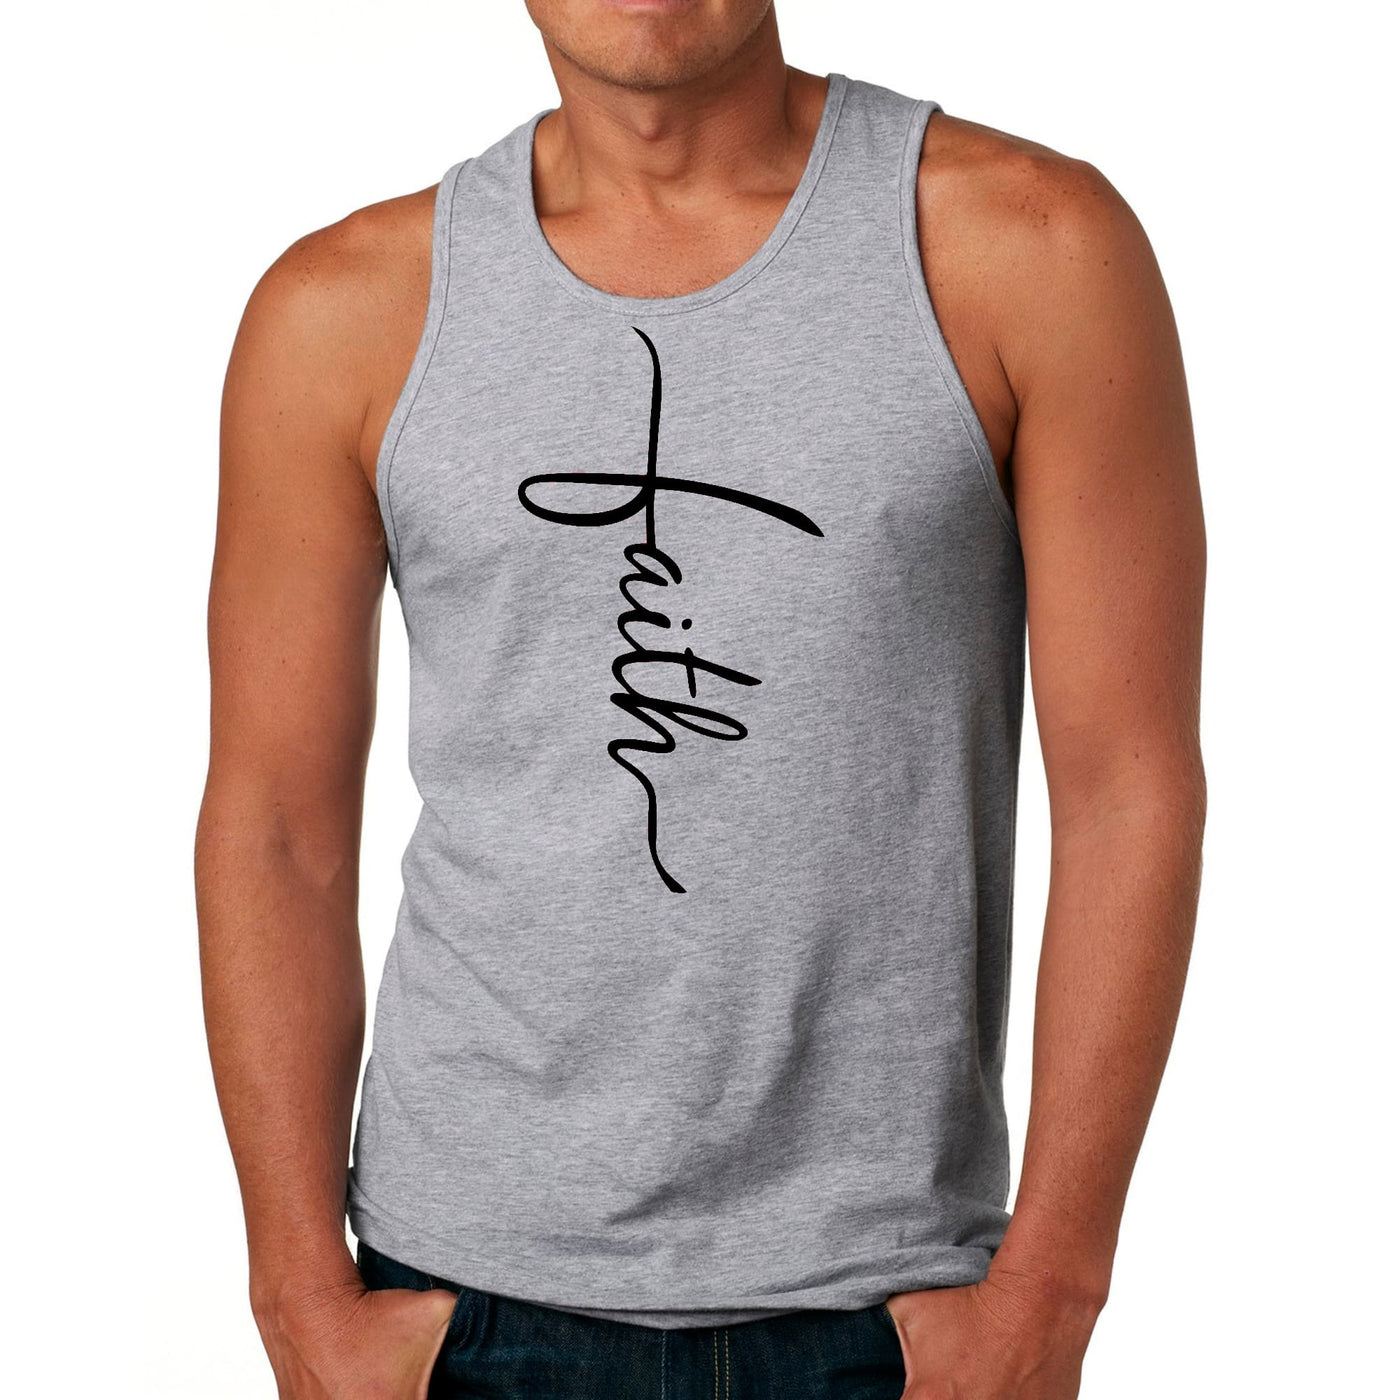 Mens Tank Top Fitness T - shirt Faith Script Cross Black Illustration - Tops